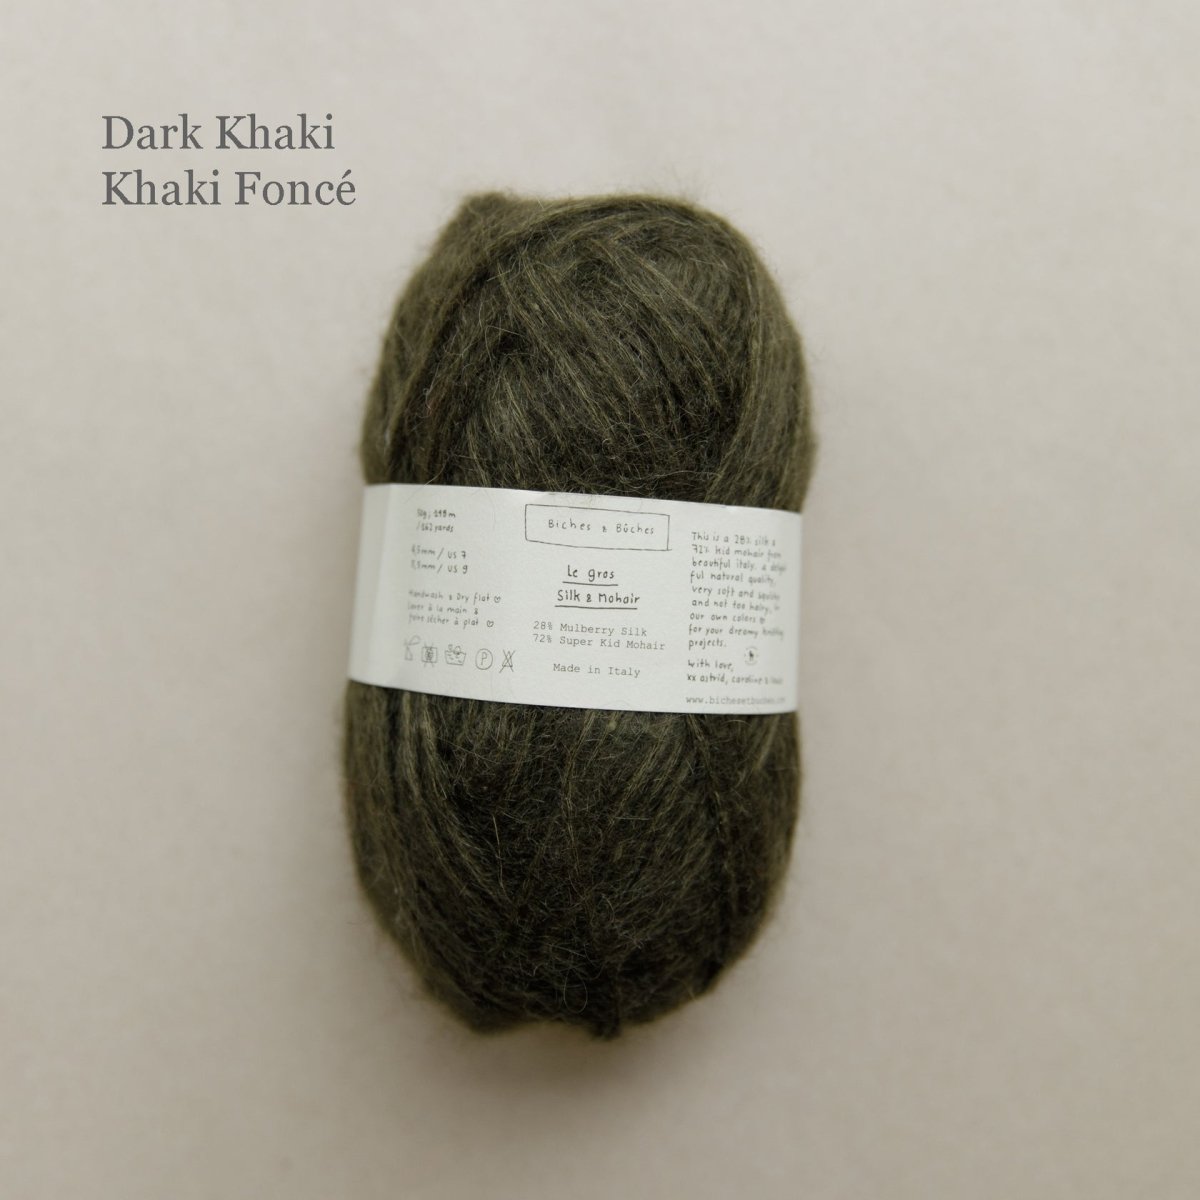 le gros silk & mohair - dark khaki at Wabi Sabi